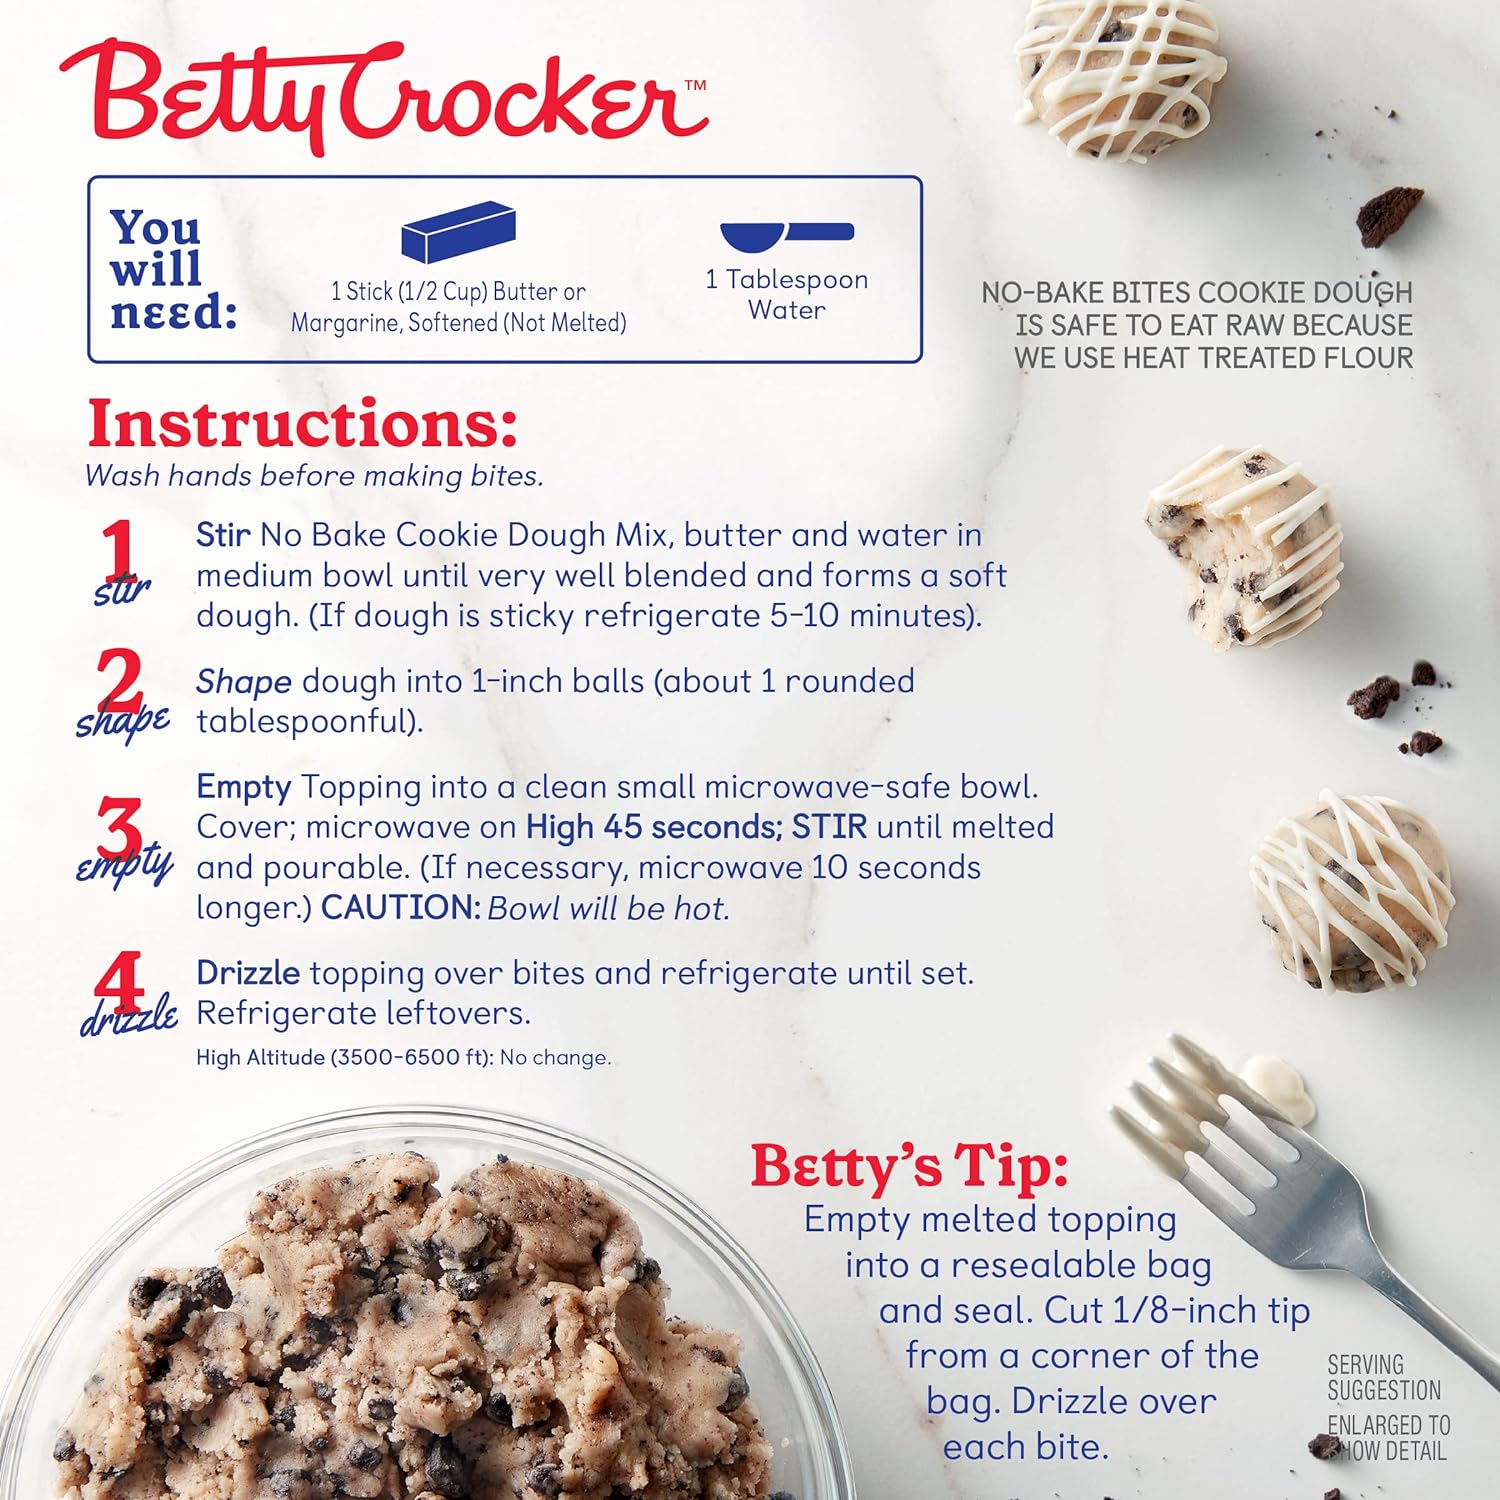 Betty Crocker No-Bake Bites Cookies and Cream Cookie Dough, 12.2 oz. : Grocery & Gourmet Food